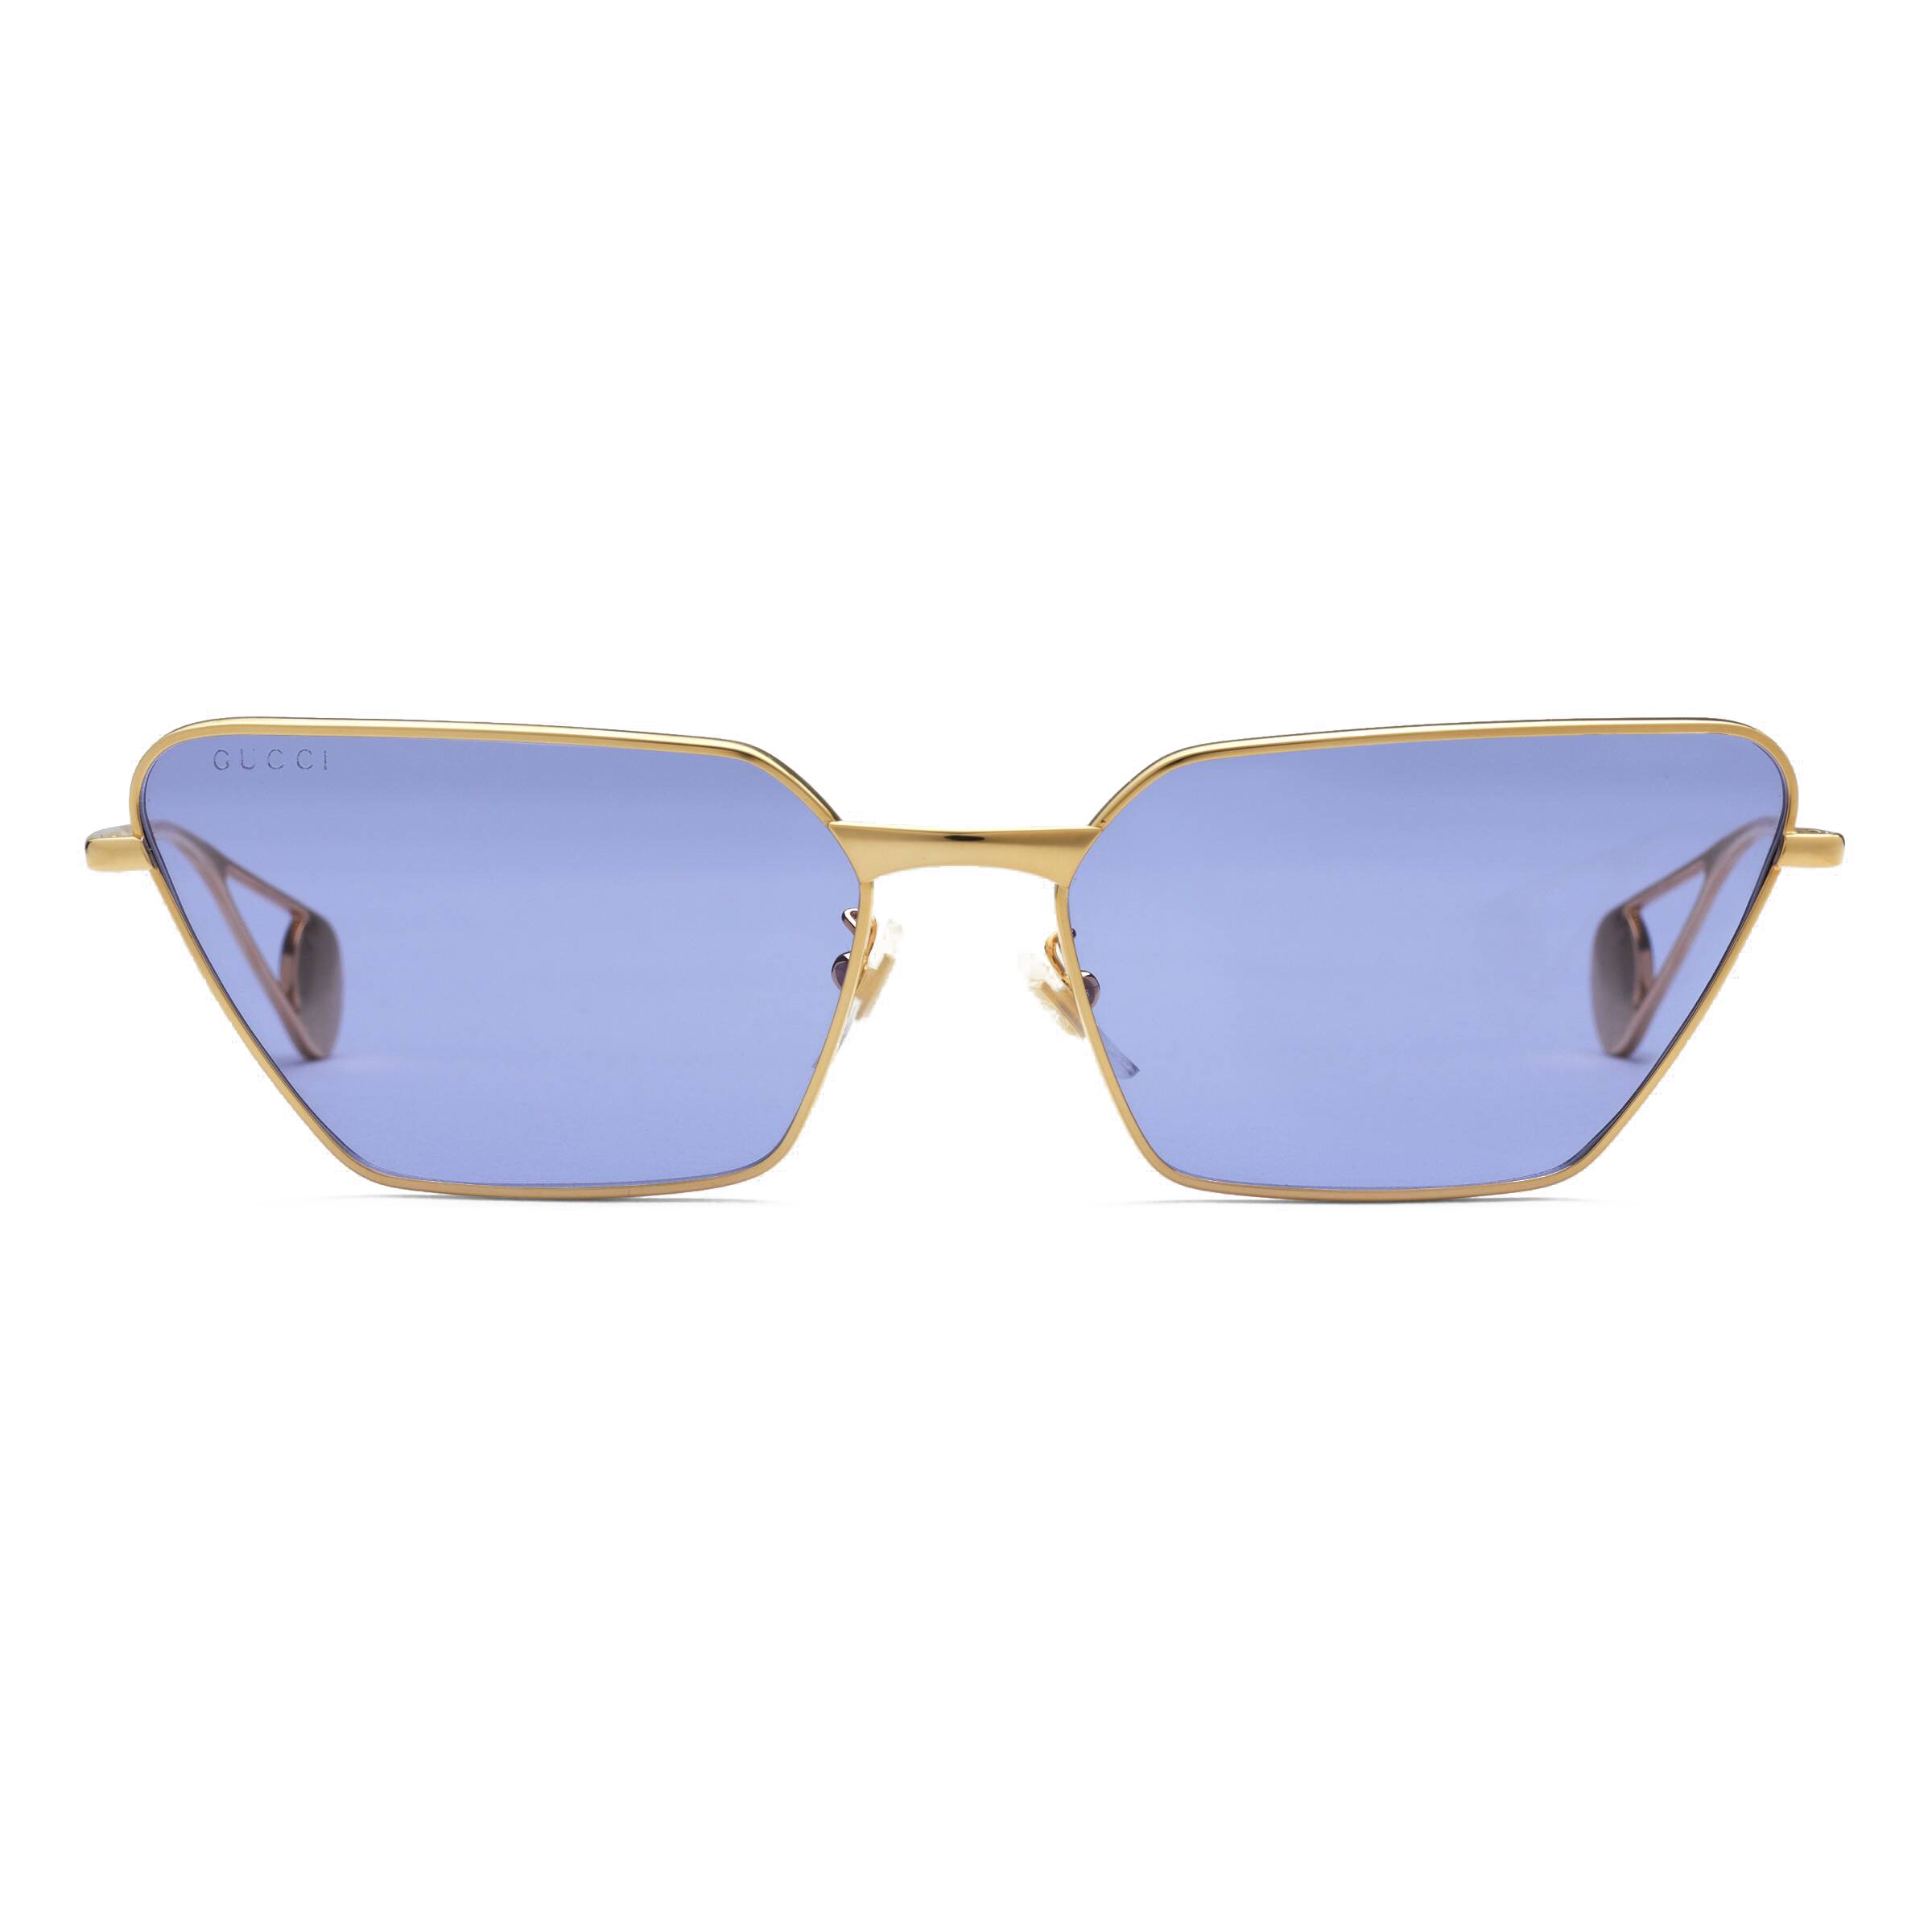 Gucci - Rectangular Sunglasses - Gold 